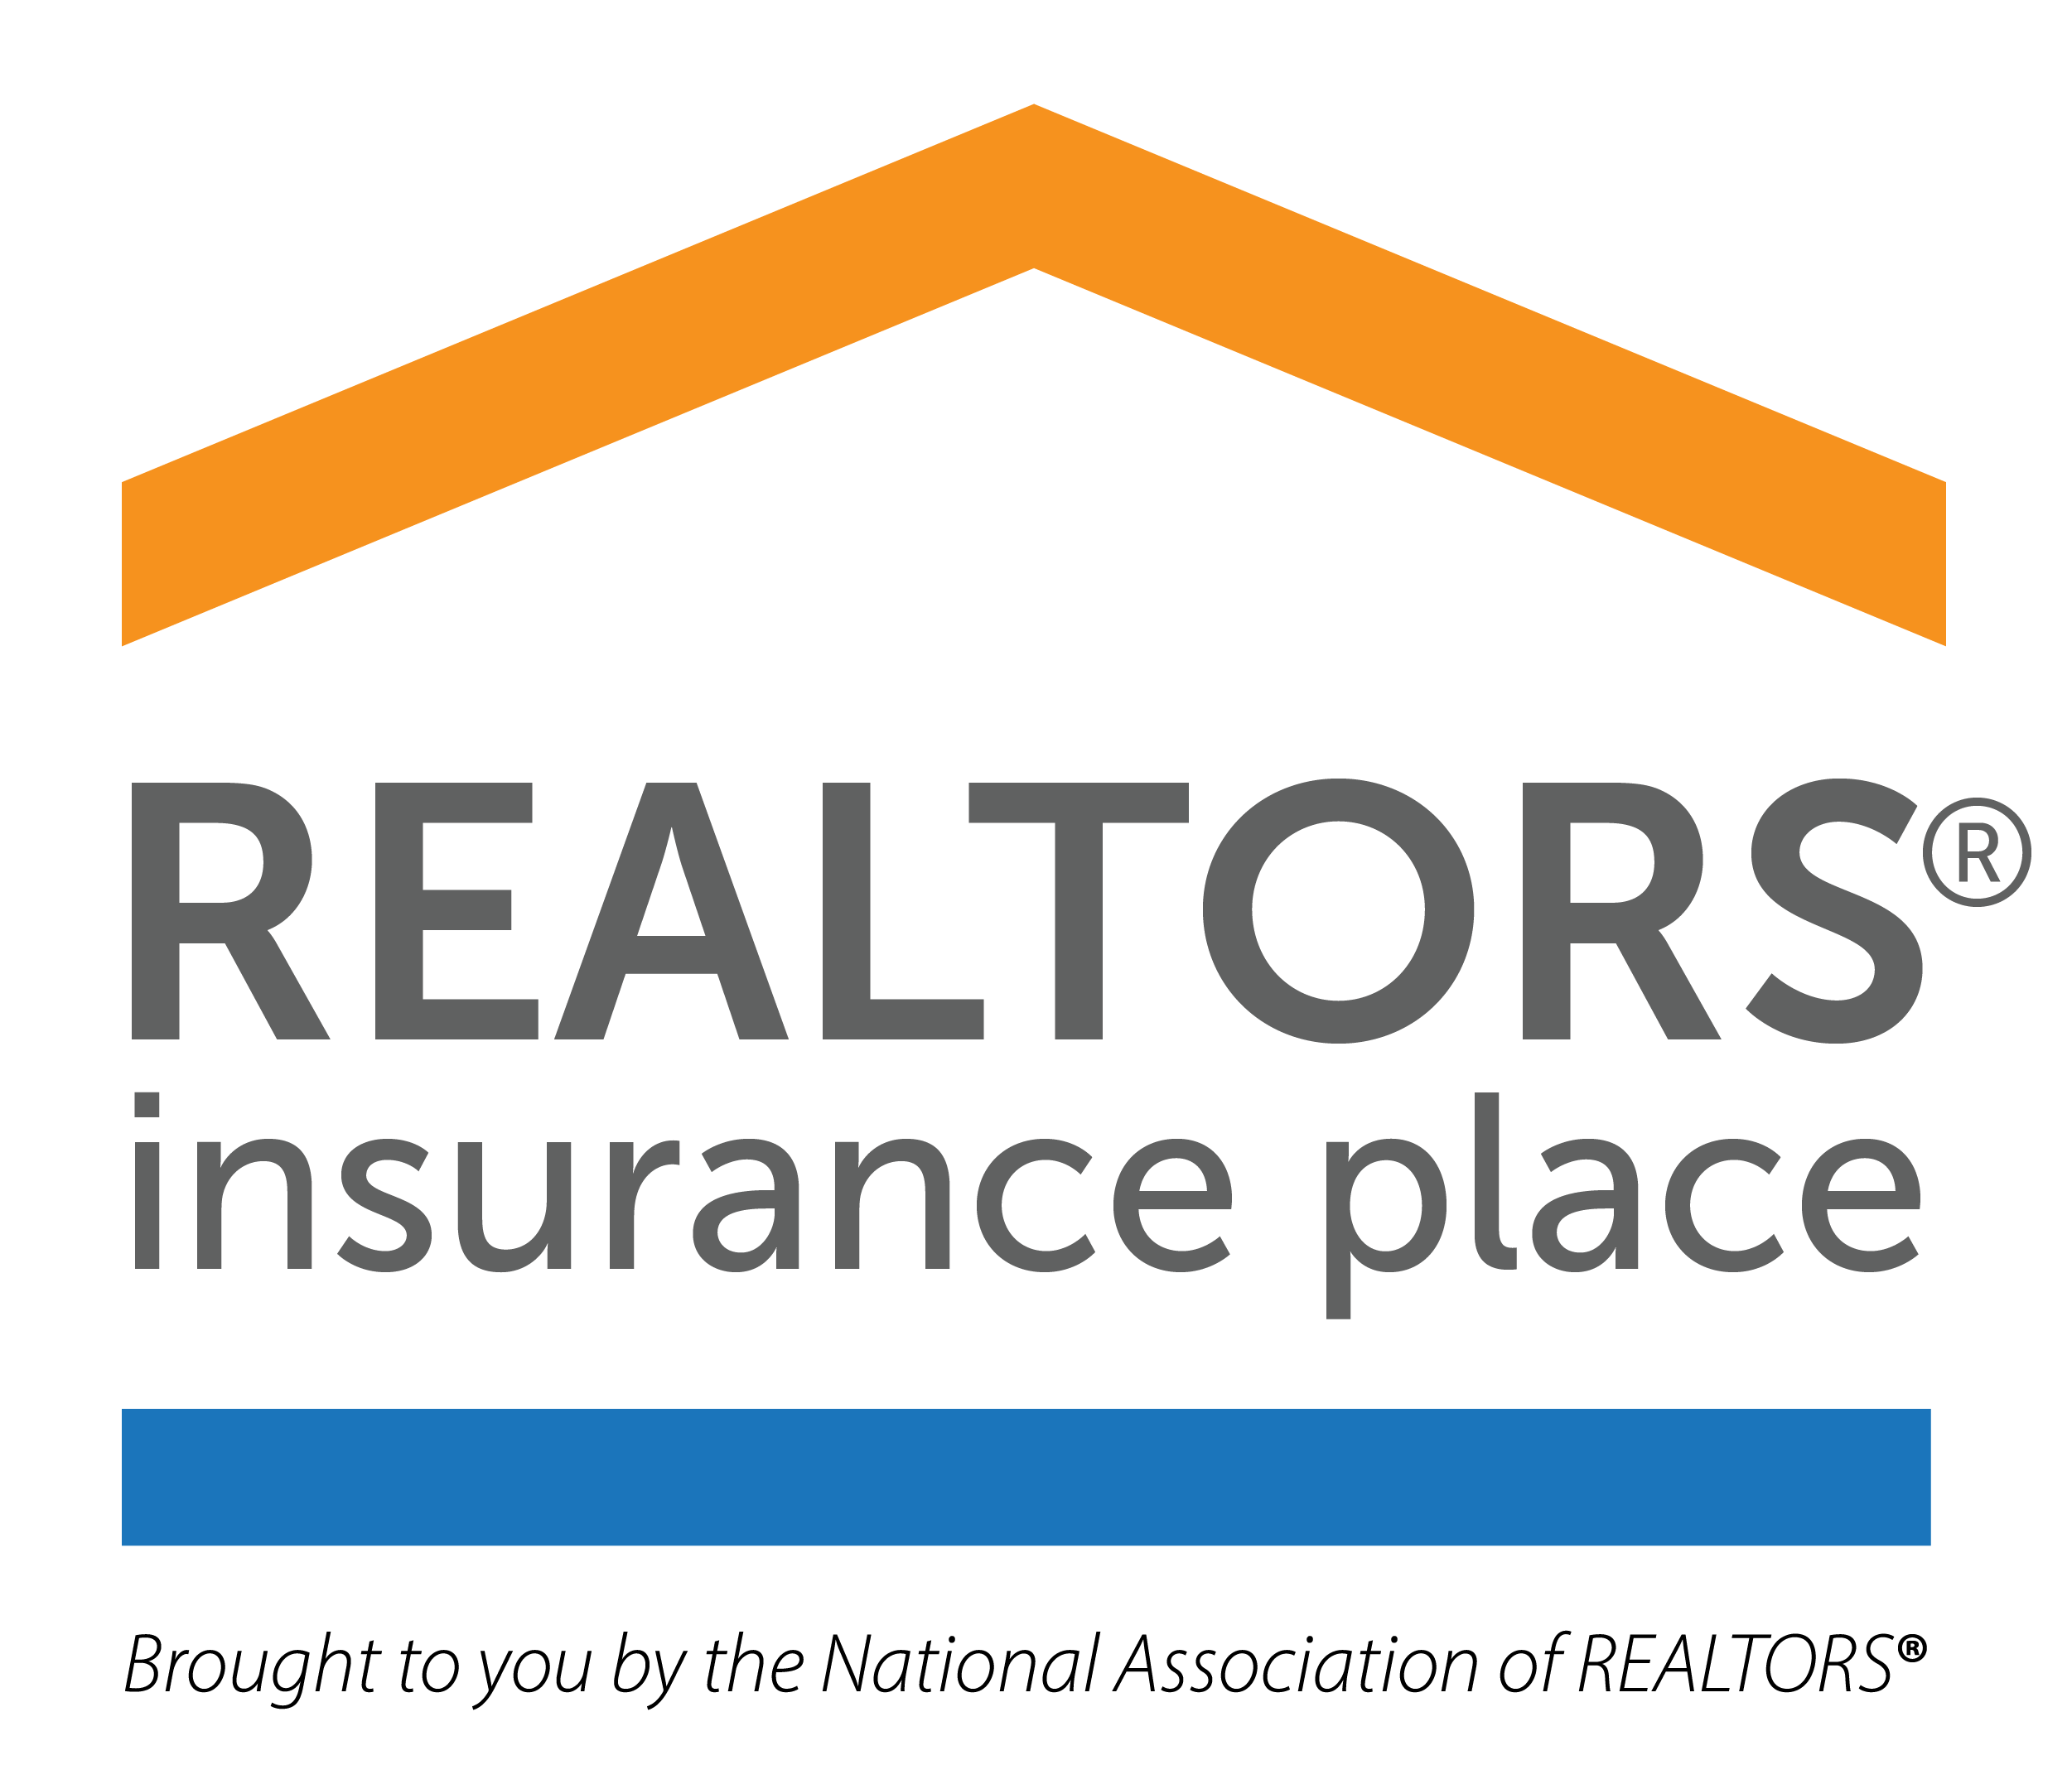 REALTORS® Insurance Place